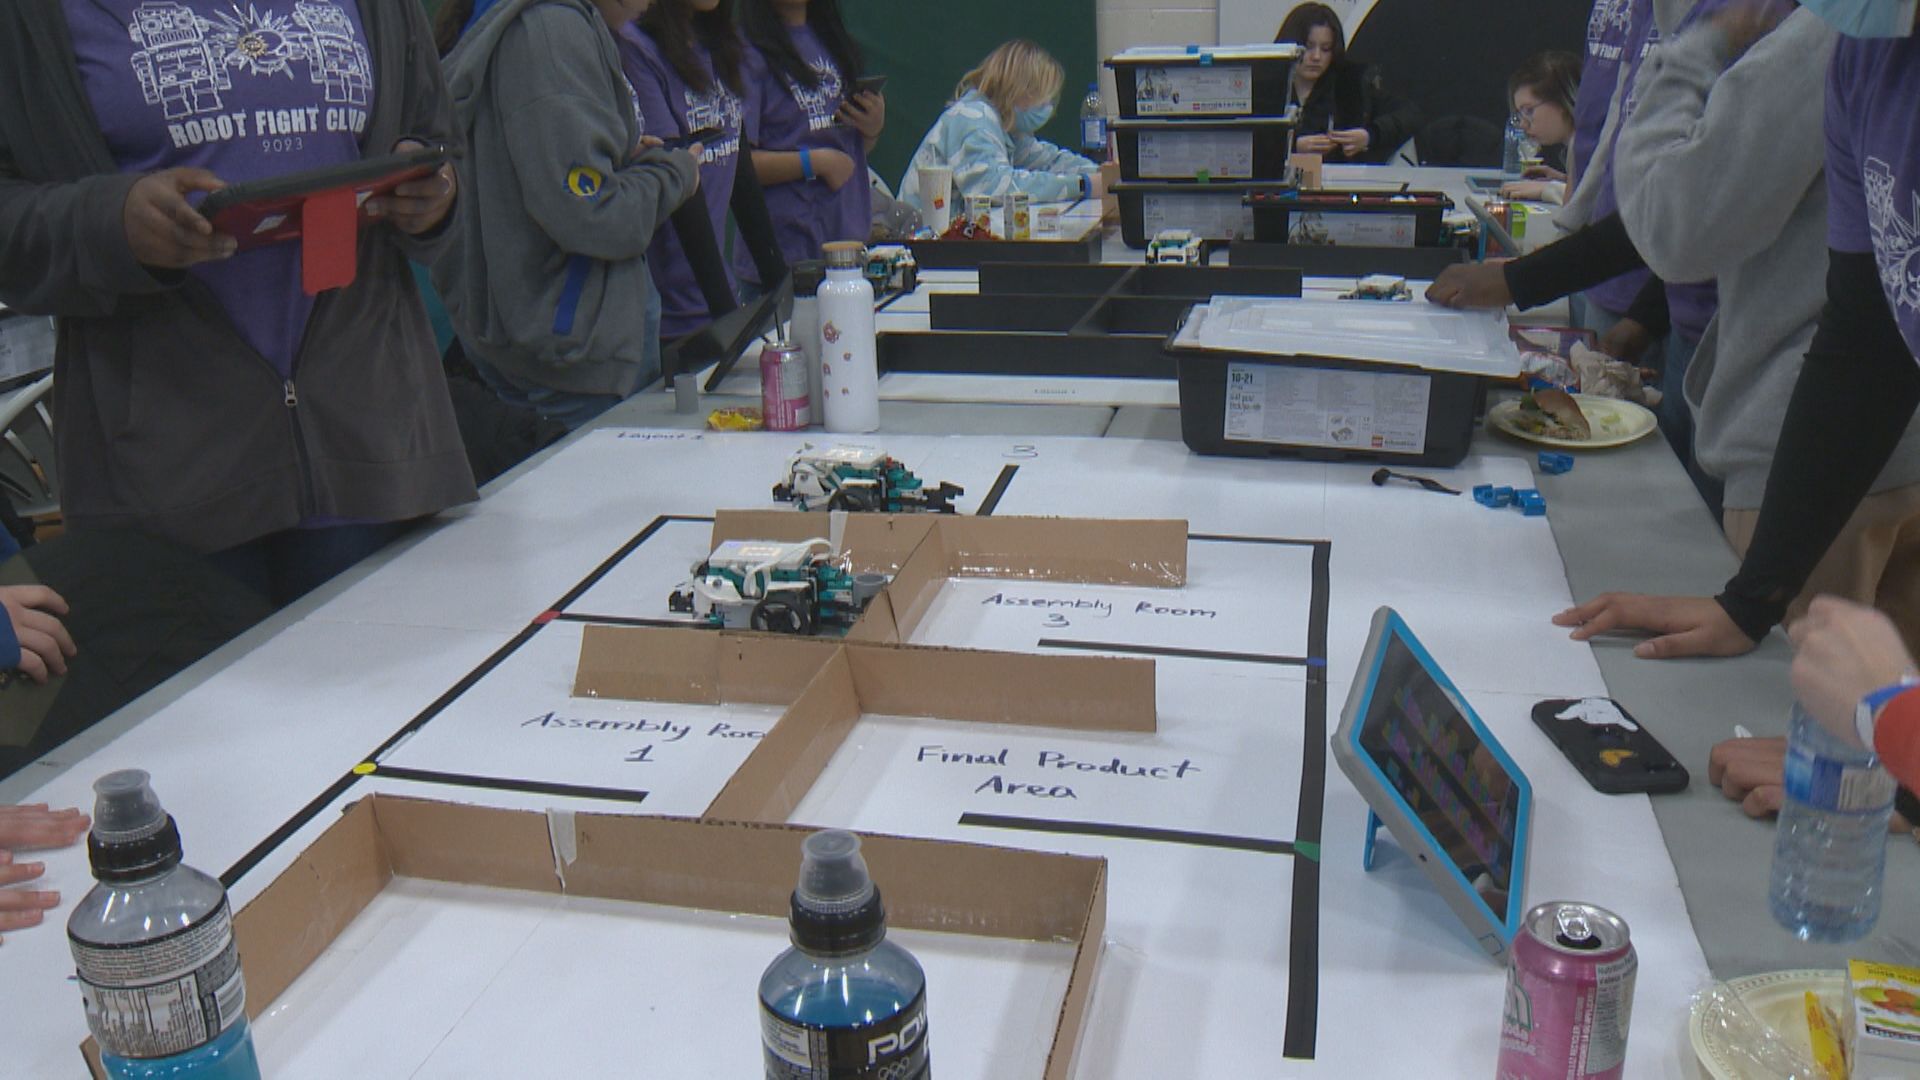 25th annual Manitoba robot games returns in Winnipeg